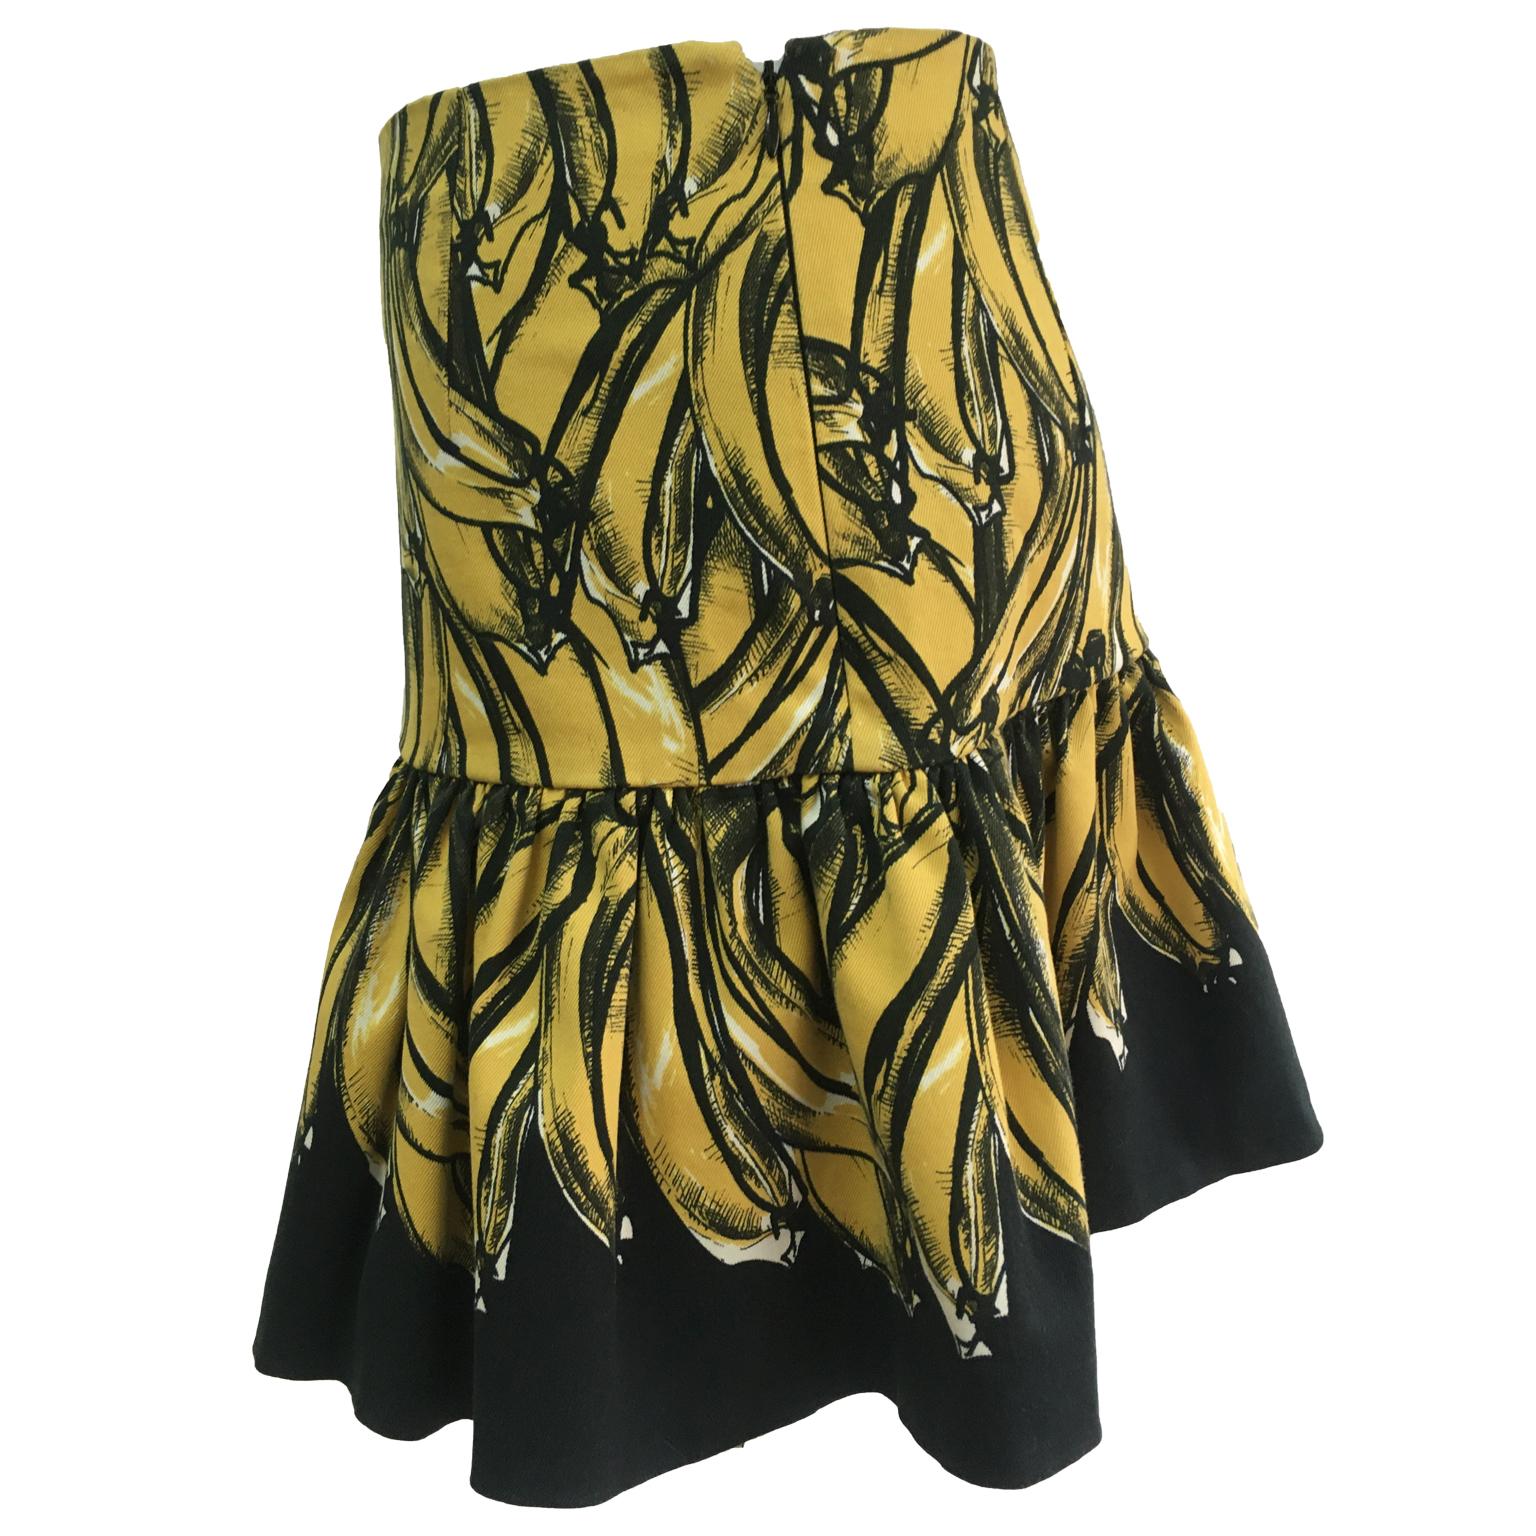 Iconic Prada banana skirt from SS 2011. 
Size 40 IT.
Measurements :
Length : 40.5 cm
Waist : 82 cm
